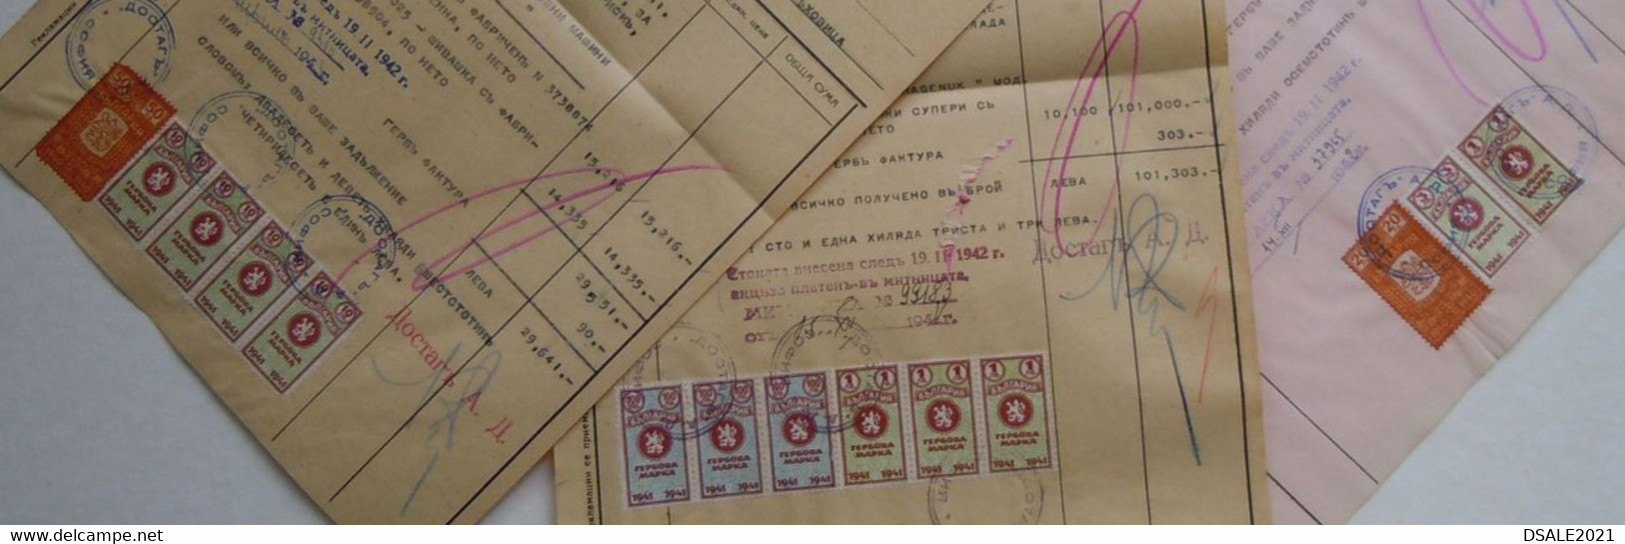 Bulgaria Lot Of 3 Document, Selection Ww2-1940s With Rare Color Fiscal Revenue Stamps, Timbres Fiscaux Bulgarie (38487) - Sellos De Servicio